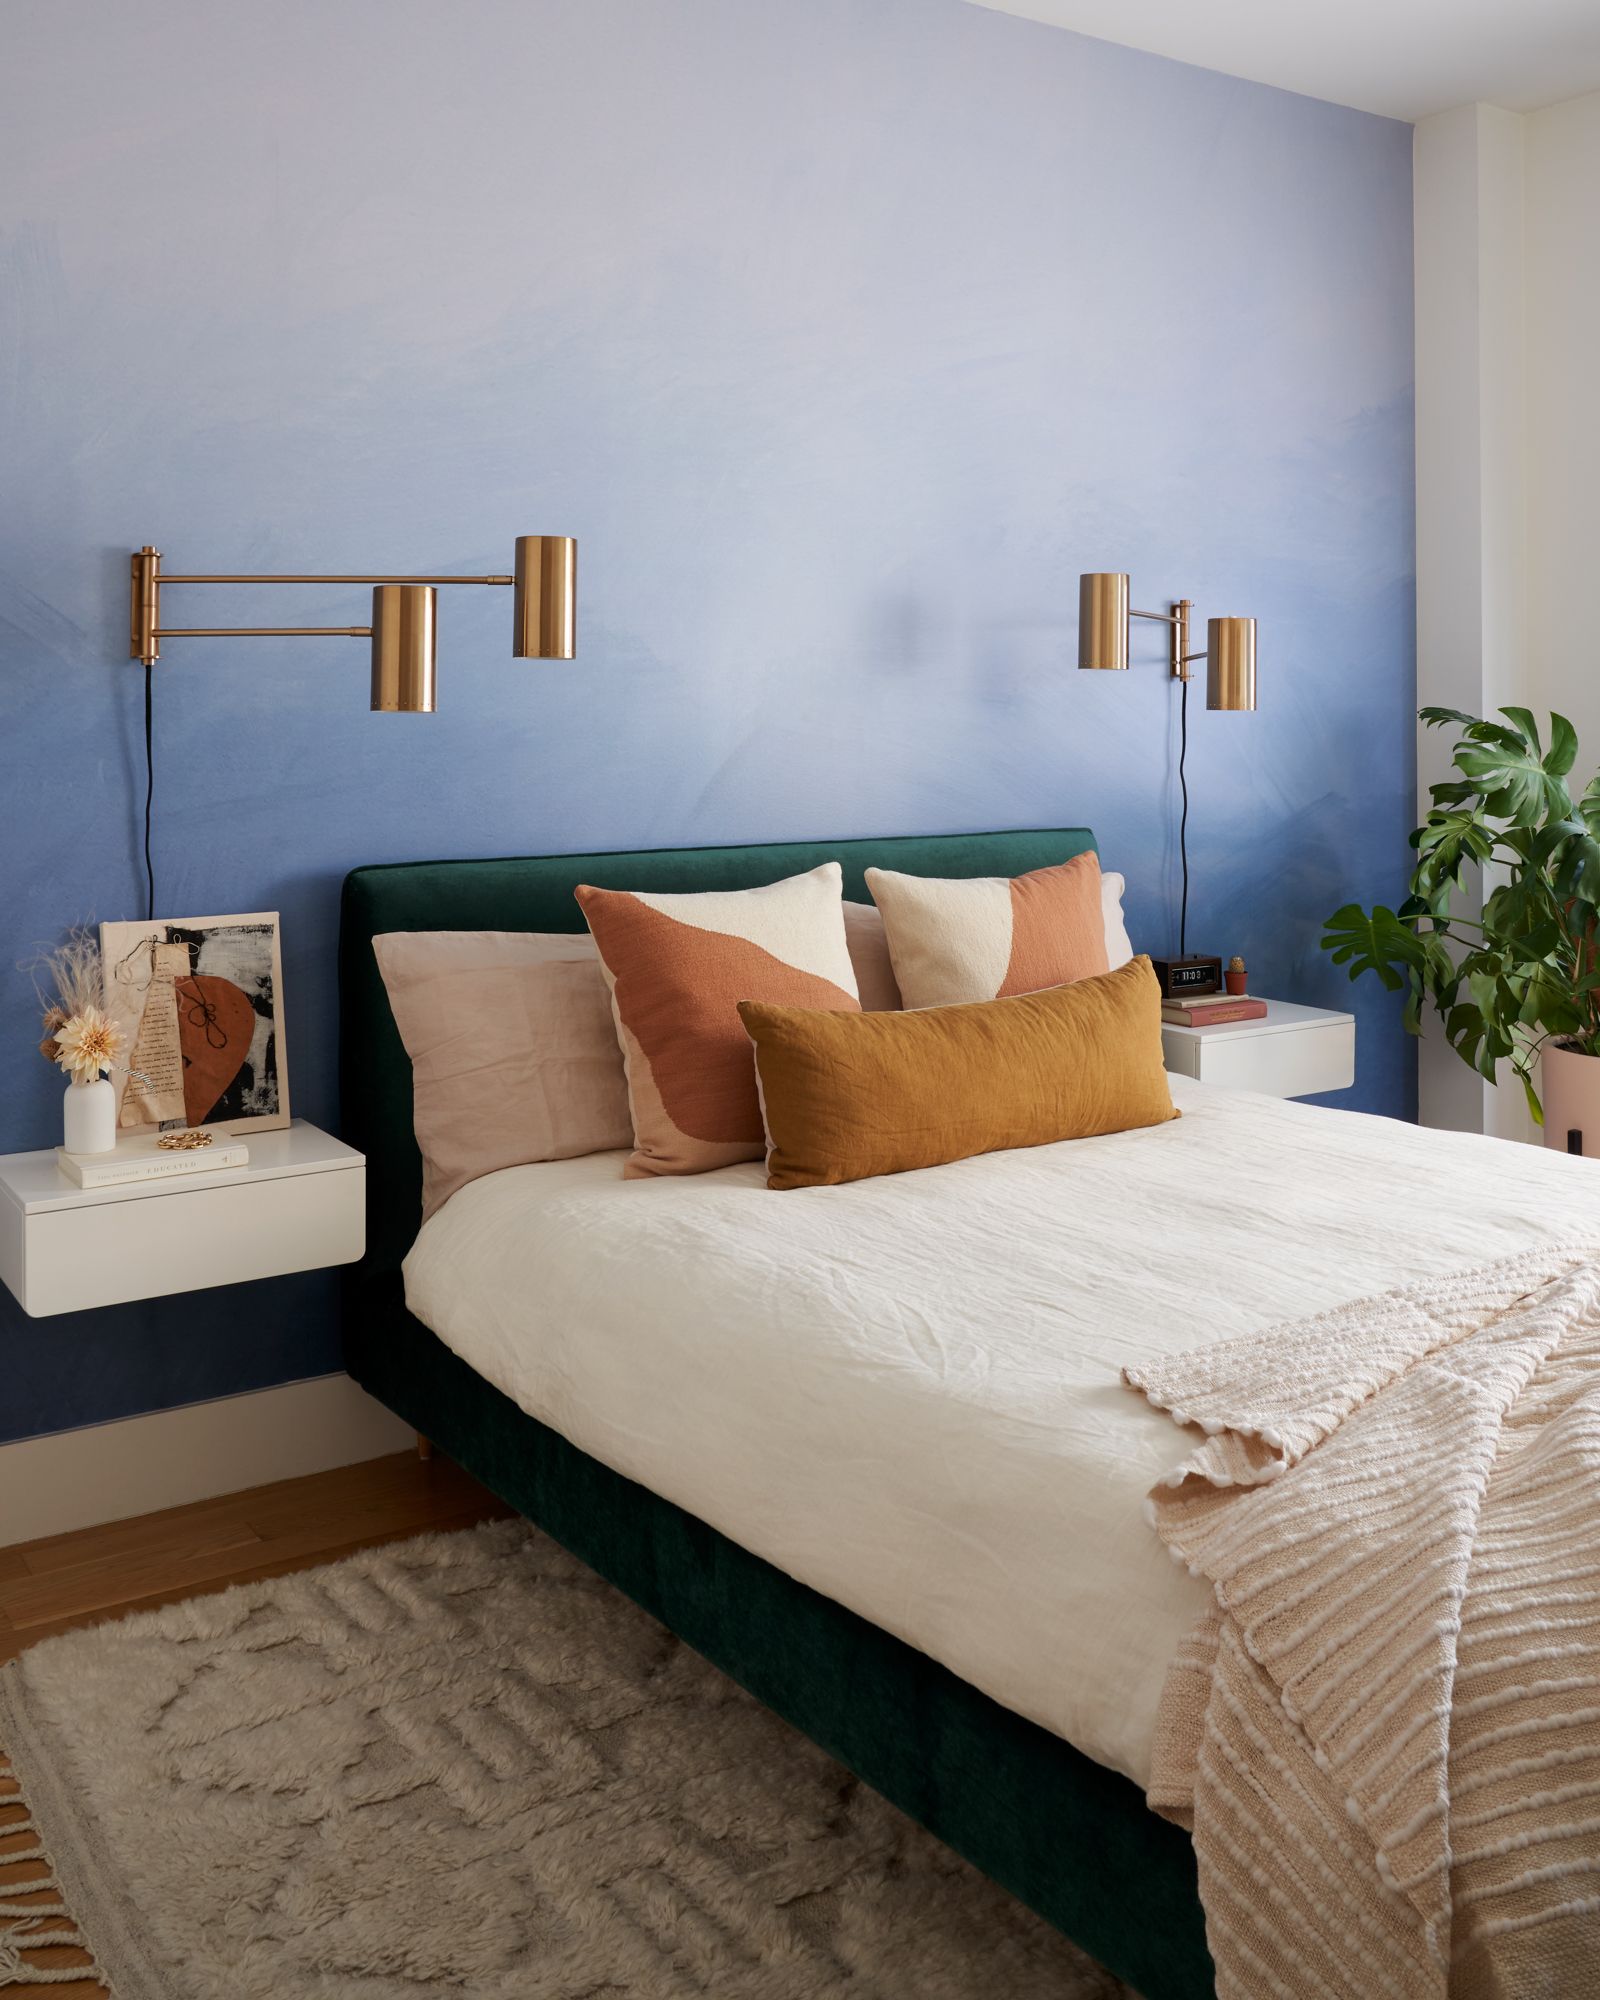 DIY Wall Art  Bedroom wall designs, Walls room, Accent wall bedroom paint